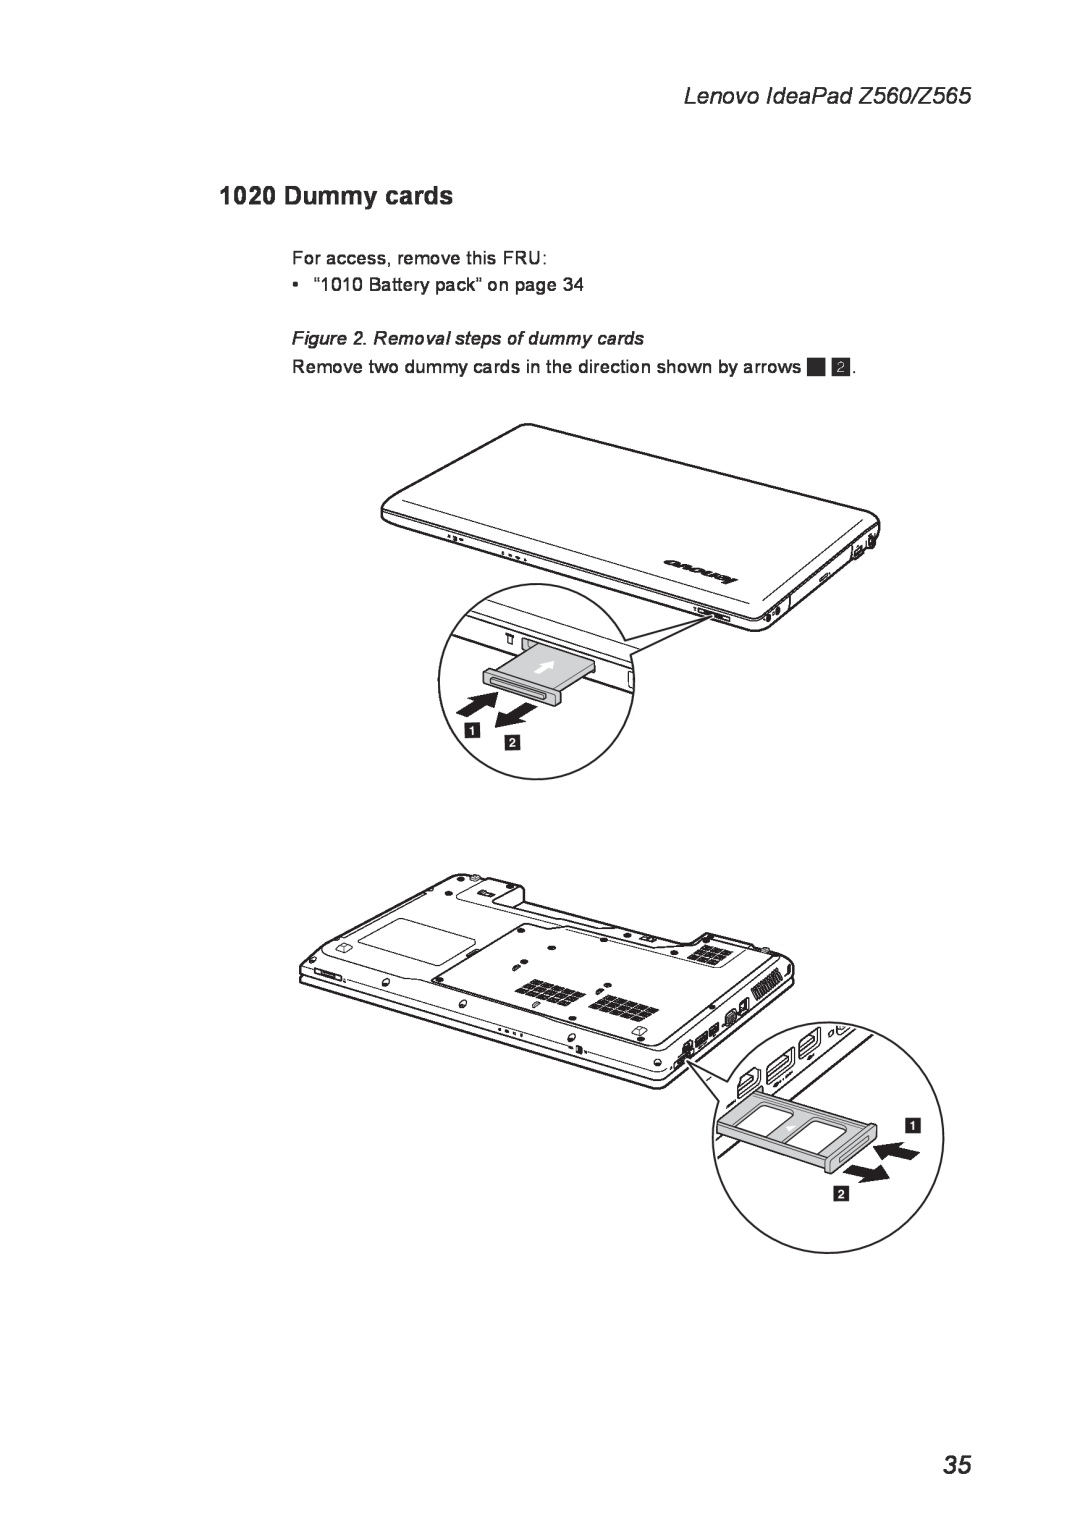 Lenovo manual Dummy cards, Removal steps of dummy cards, Lenovo IdeaPad Z560/Z565 